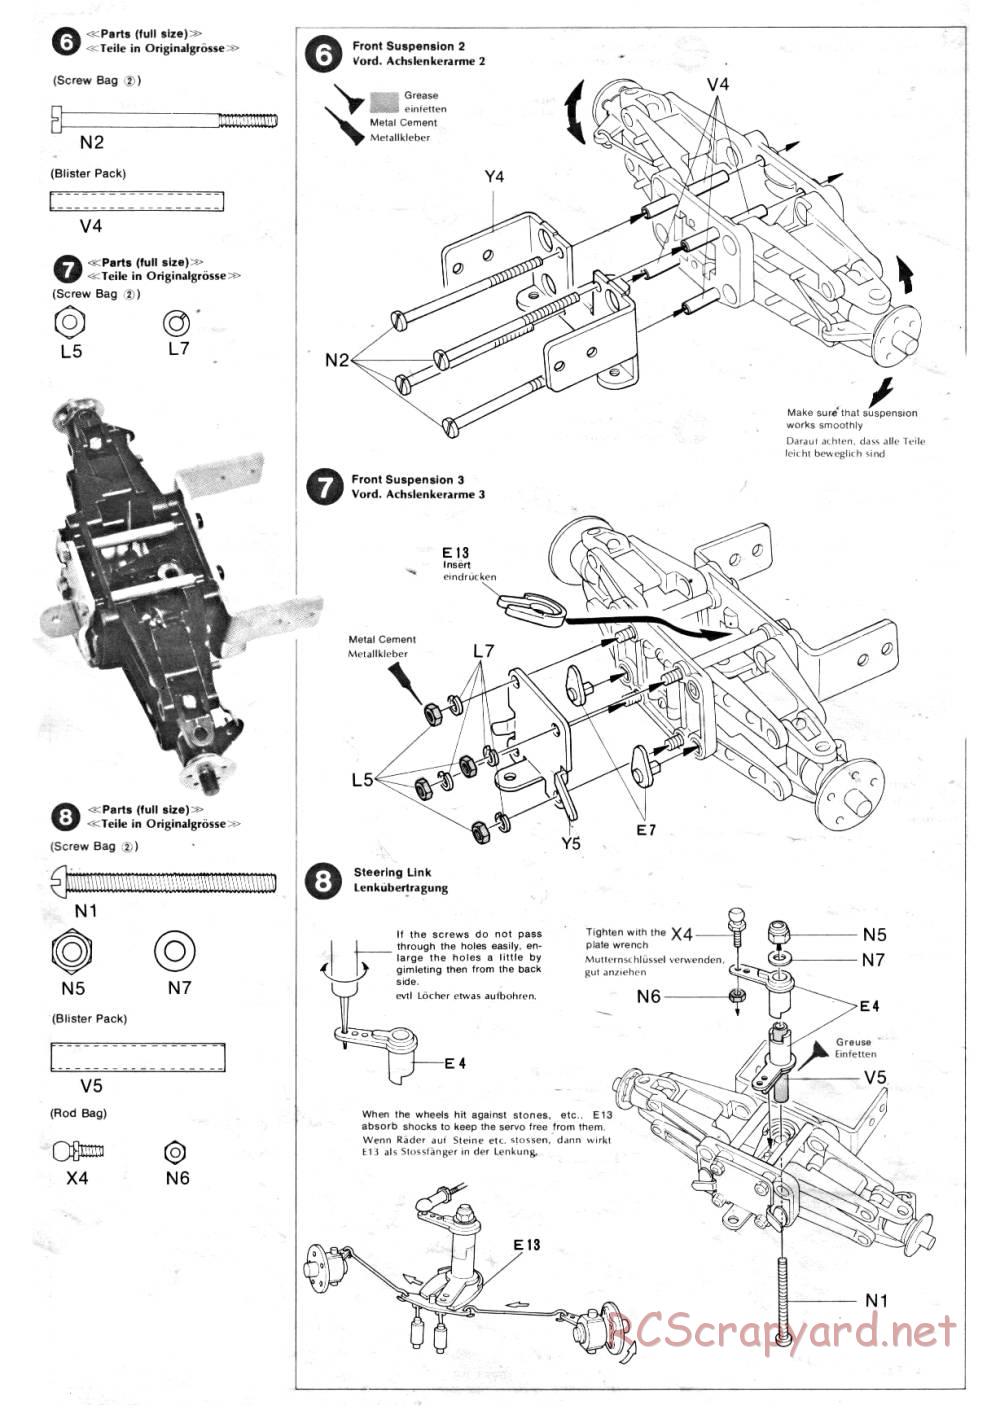 Tamiya - Lamborghini Cheetah - 58007 - Manual - Page 6